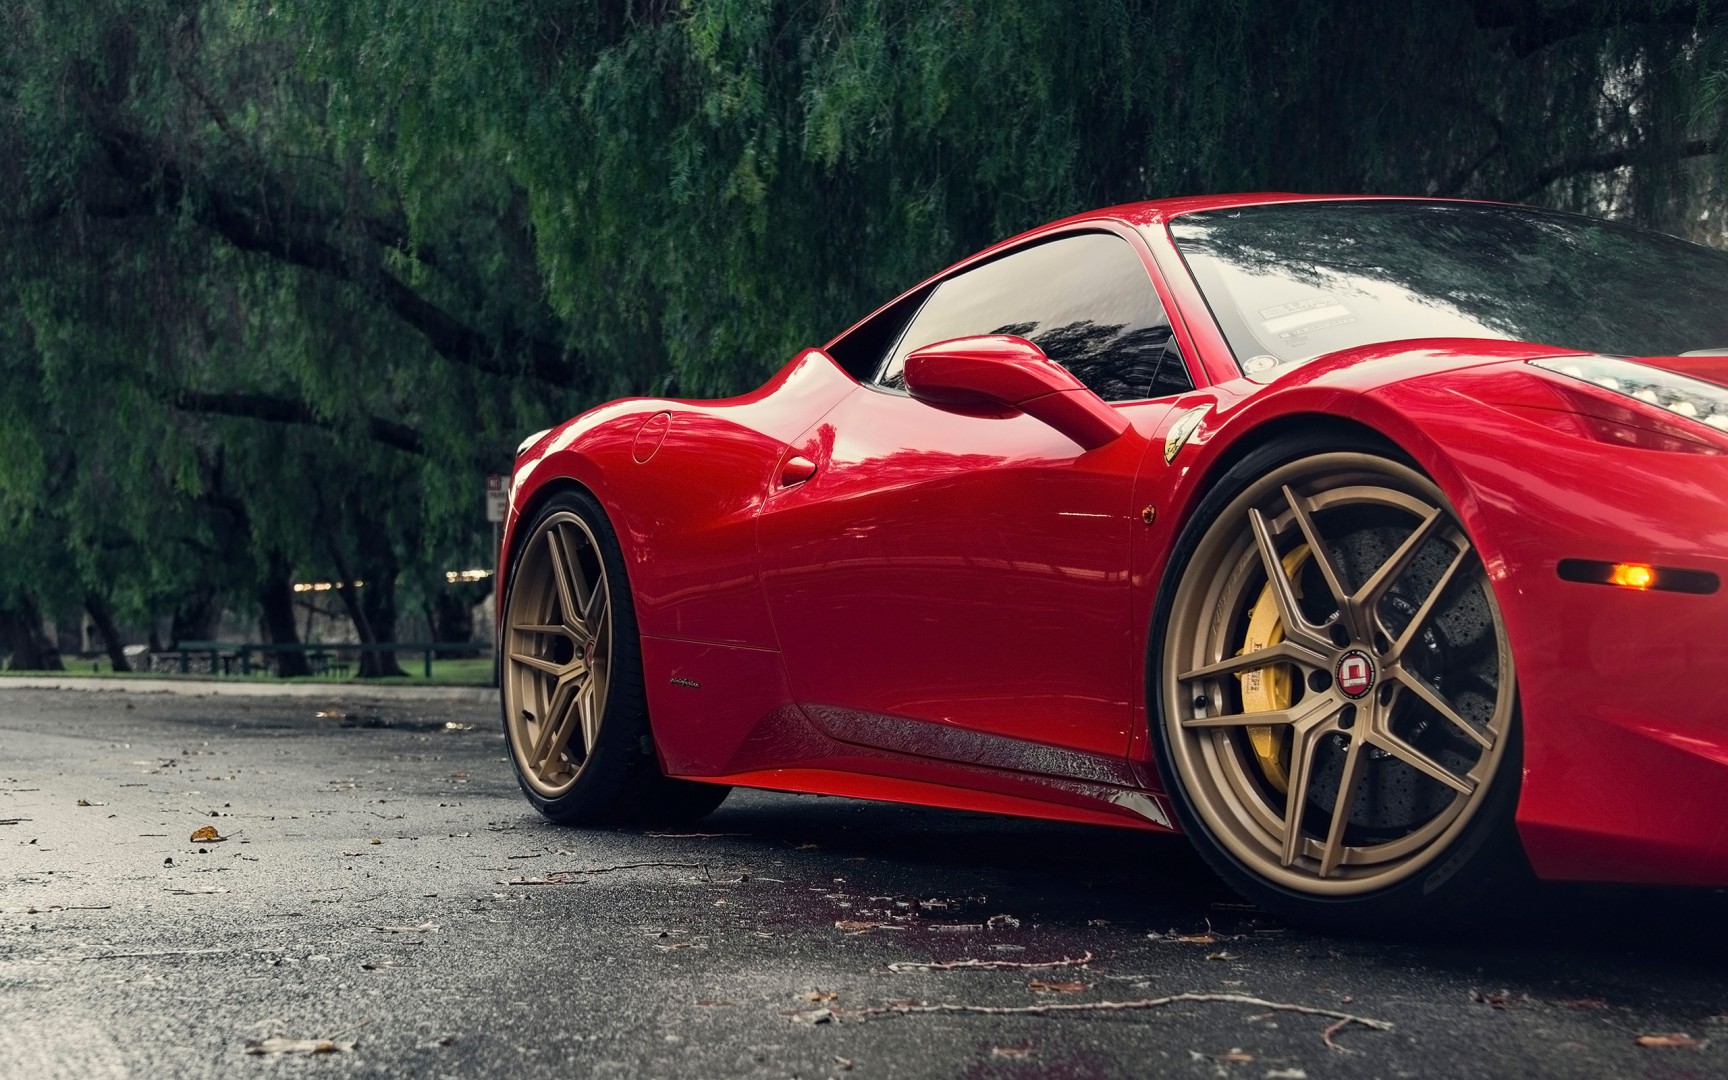 Free Download 2015 Klassen Id Ferrari 458 Italia 2 Car Hd Wallpaper Cars [1728x1080] For Your